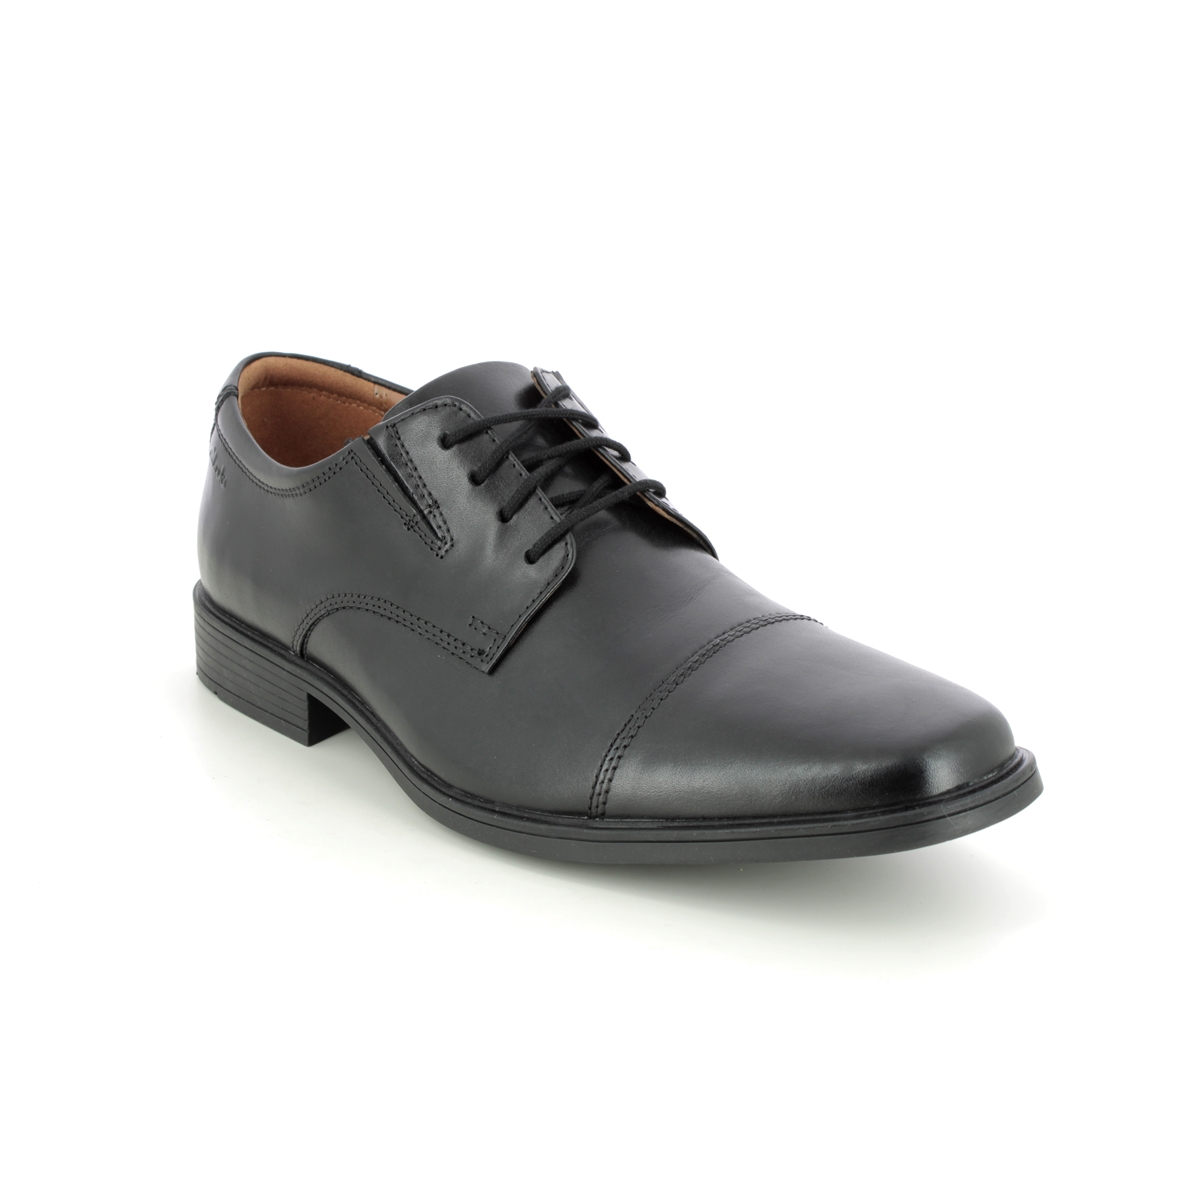 Clarks Tilden Cap Black Leather Mens Formal Shoes 103097G In Size 8 In Plain Black Leather G Width Fitting